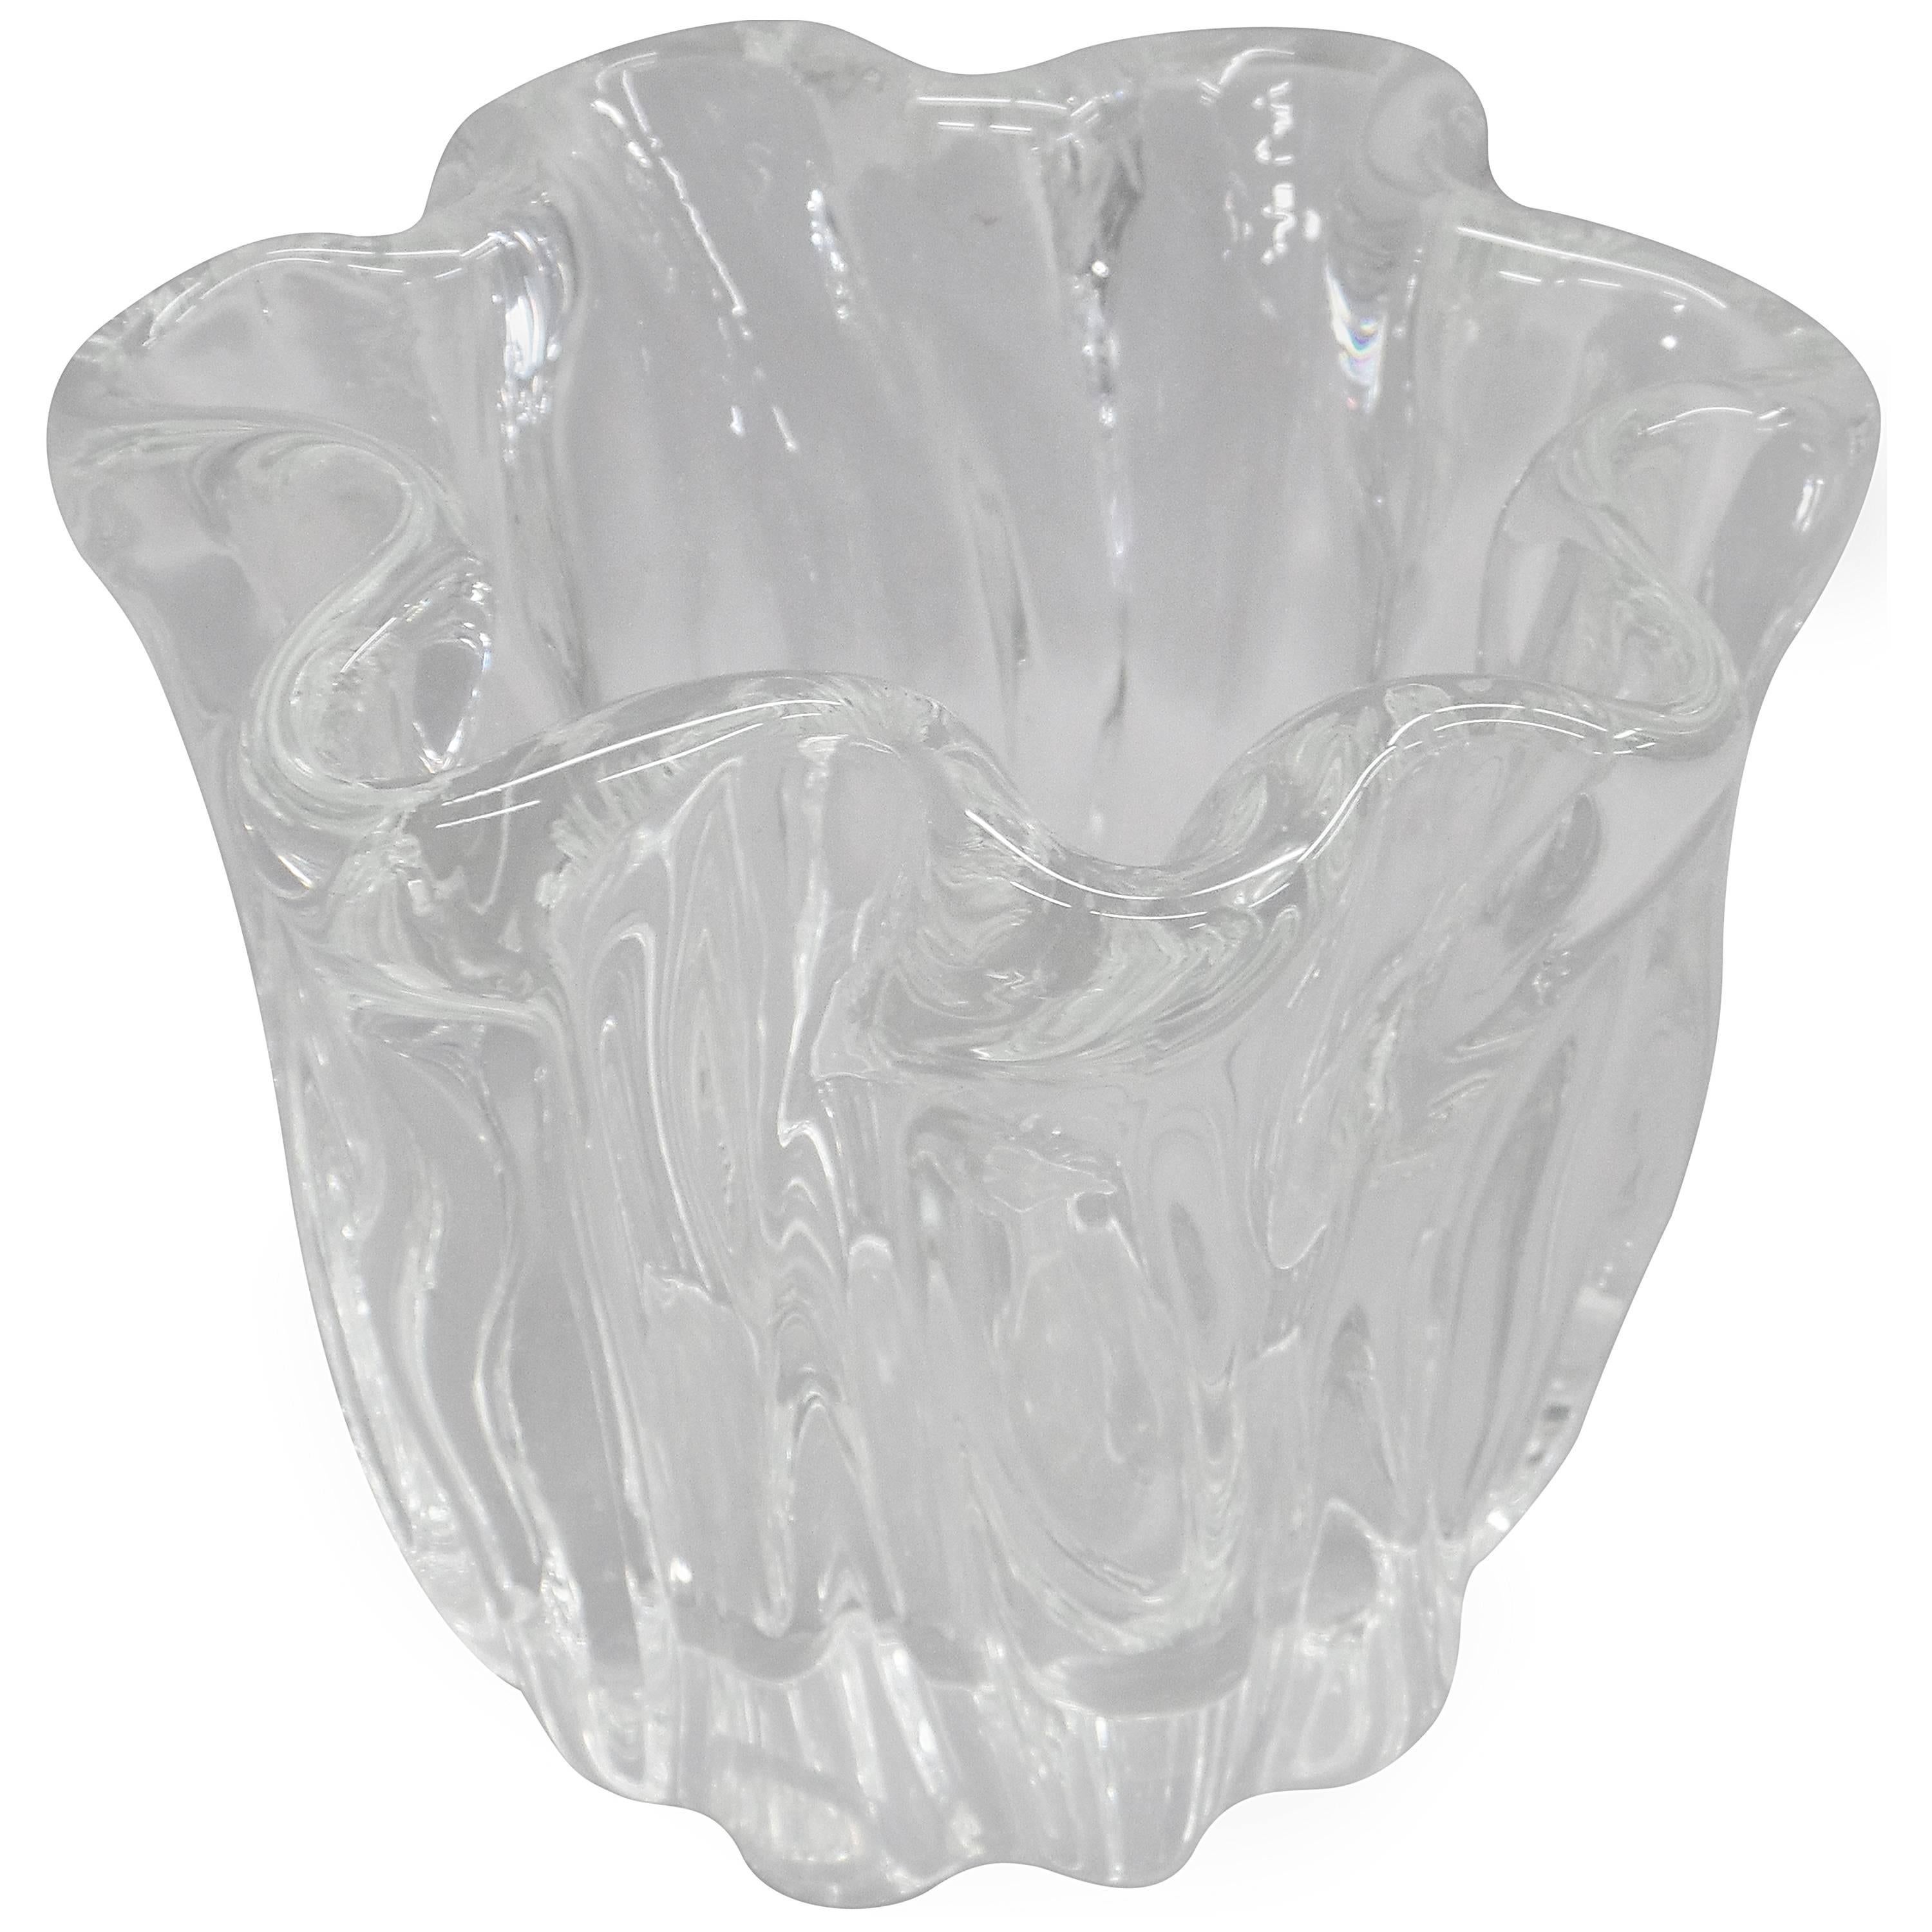 Scandinavian Mid-Century Organic Modern Blown Glass Vase by Timo Sarpaneva For Sale